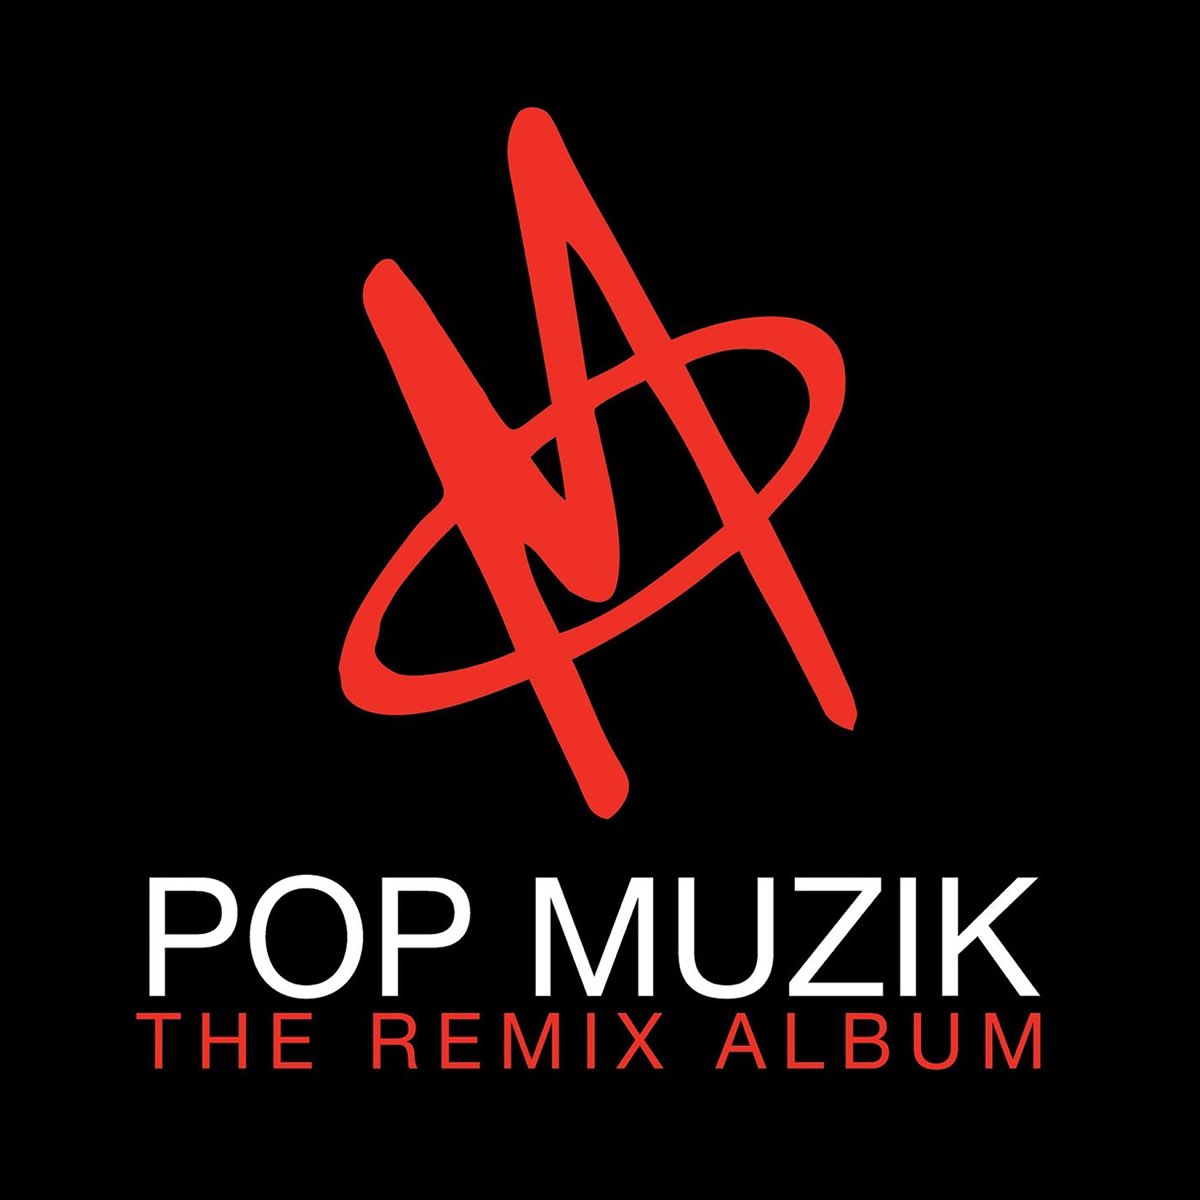 Pop Muzik - The Remix Album - Album by M - Apple Music